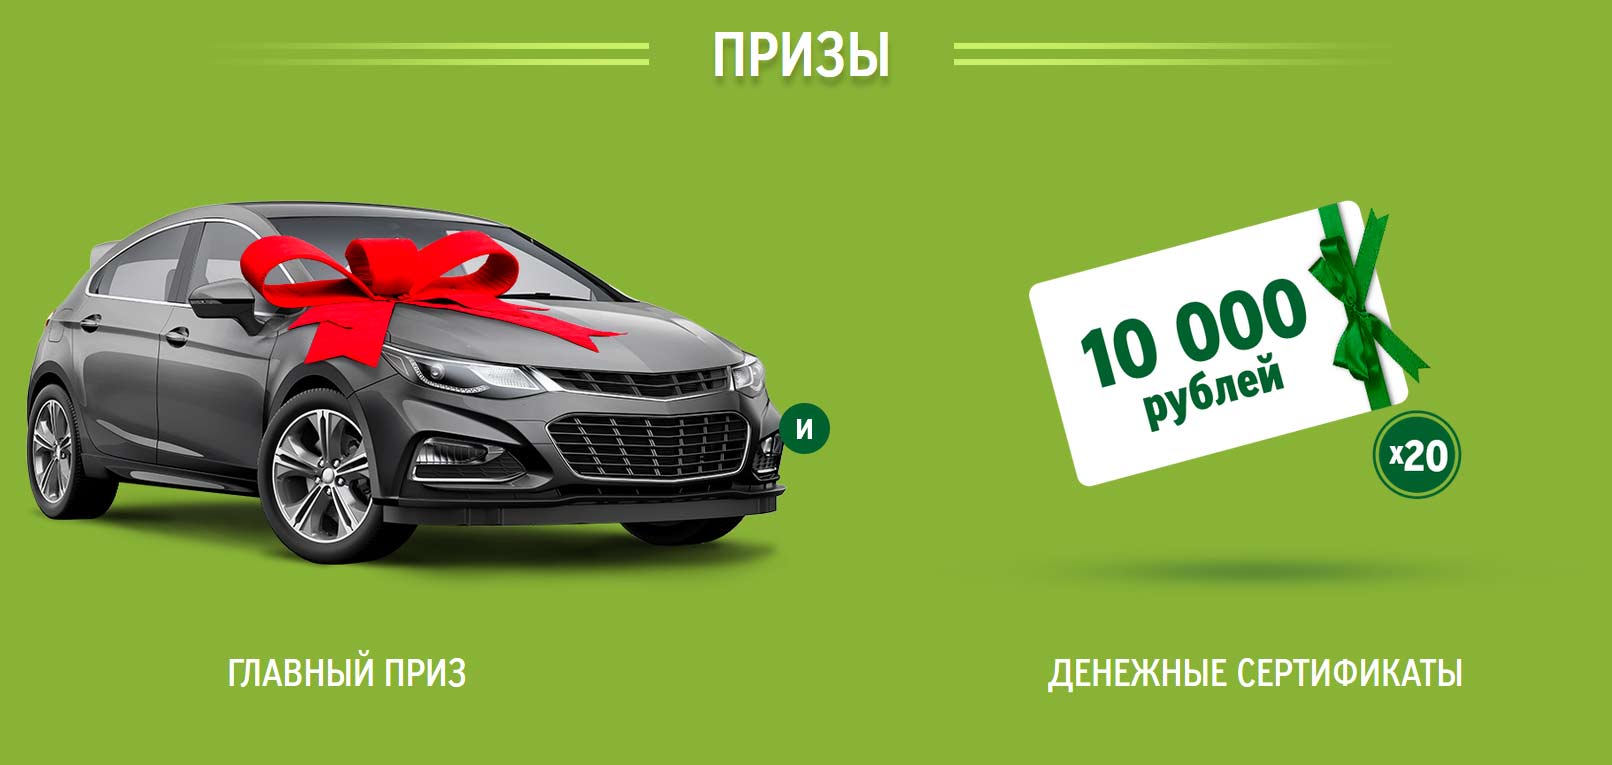 action.danone.ru регистрация 